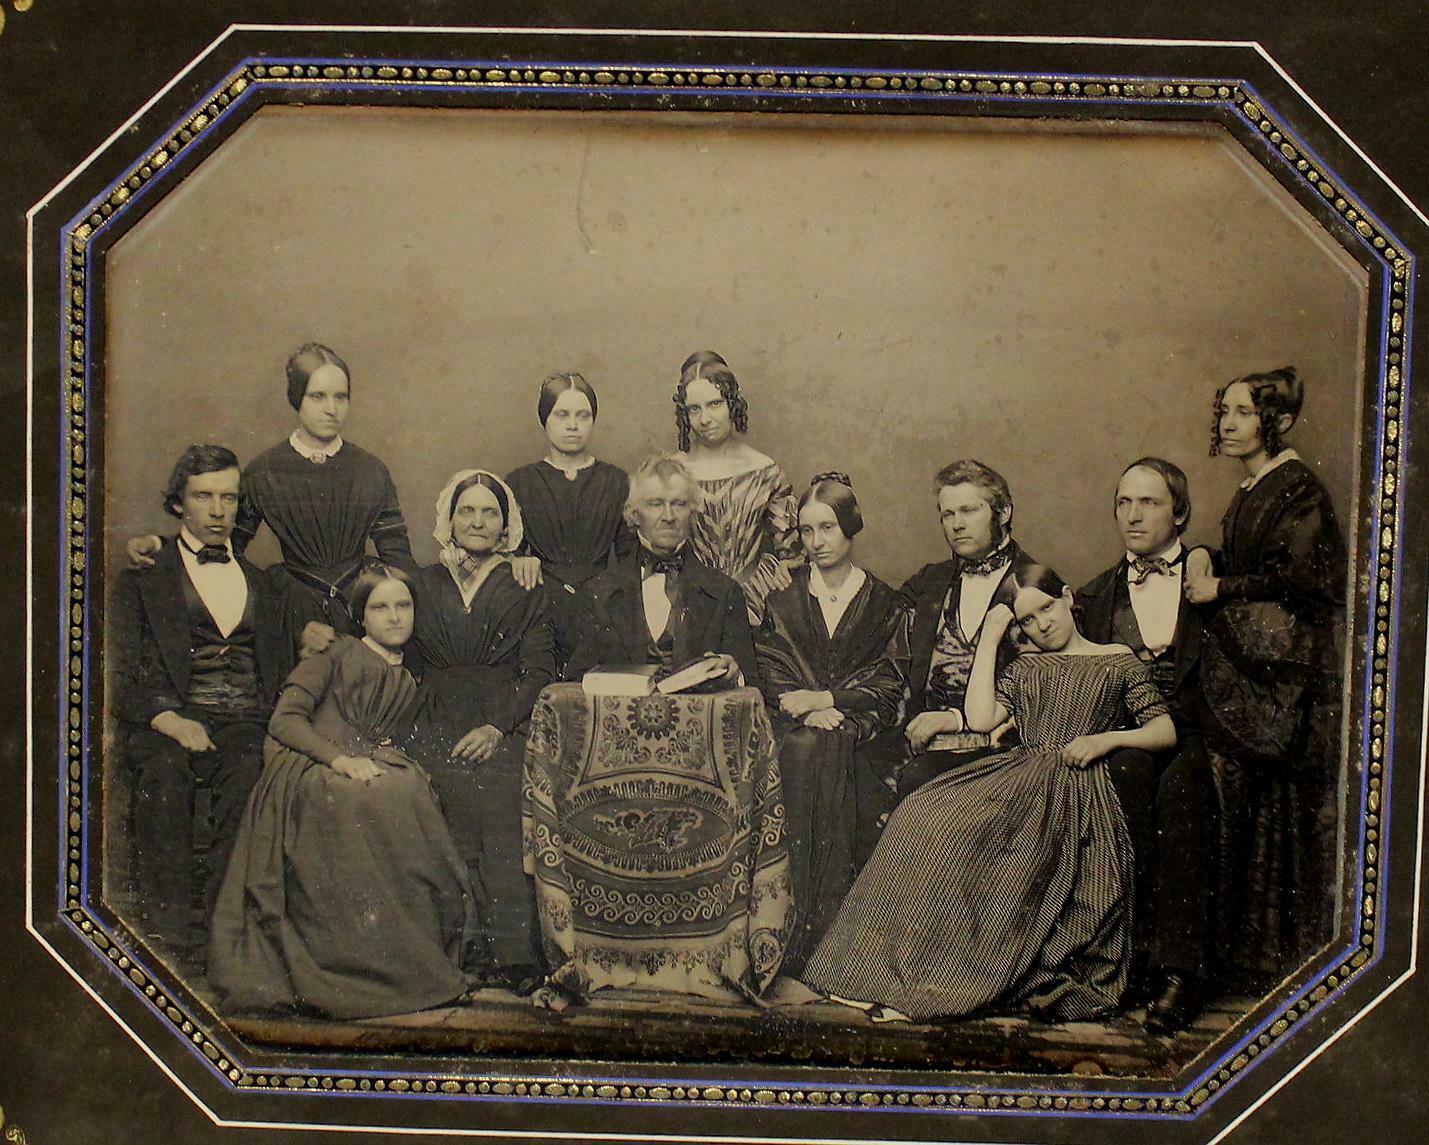 1850s - Daguerreotype - John Adams Whipple 12 Family Members Whole Plate - $7800.jpg